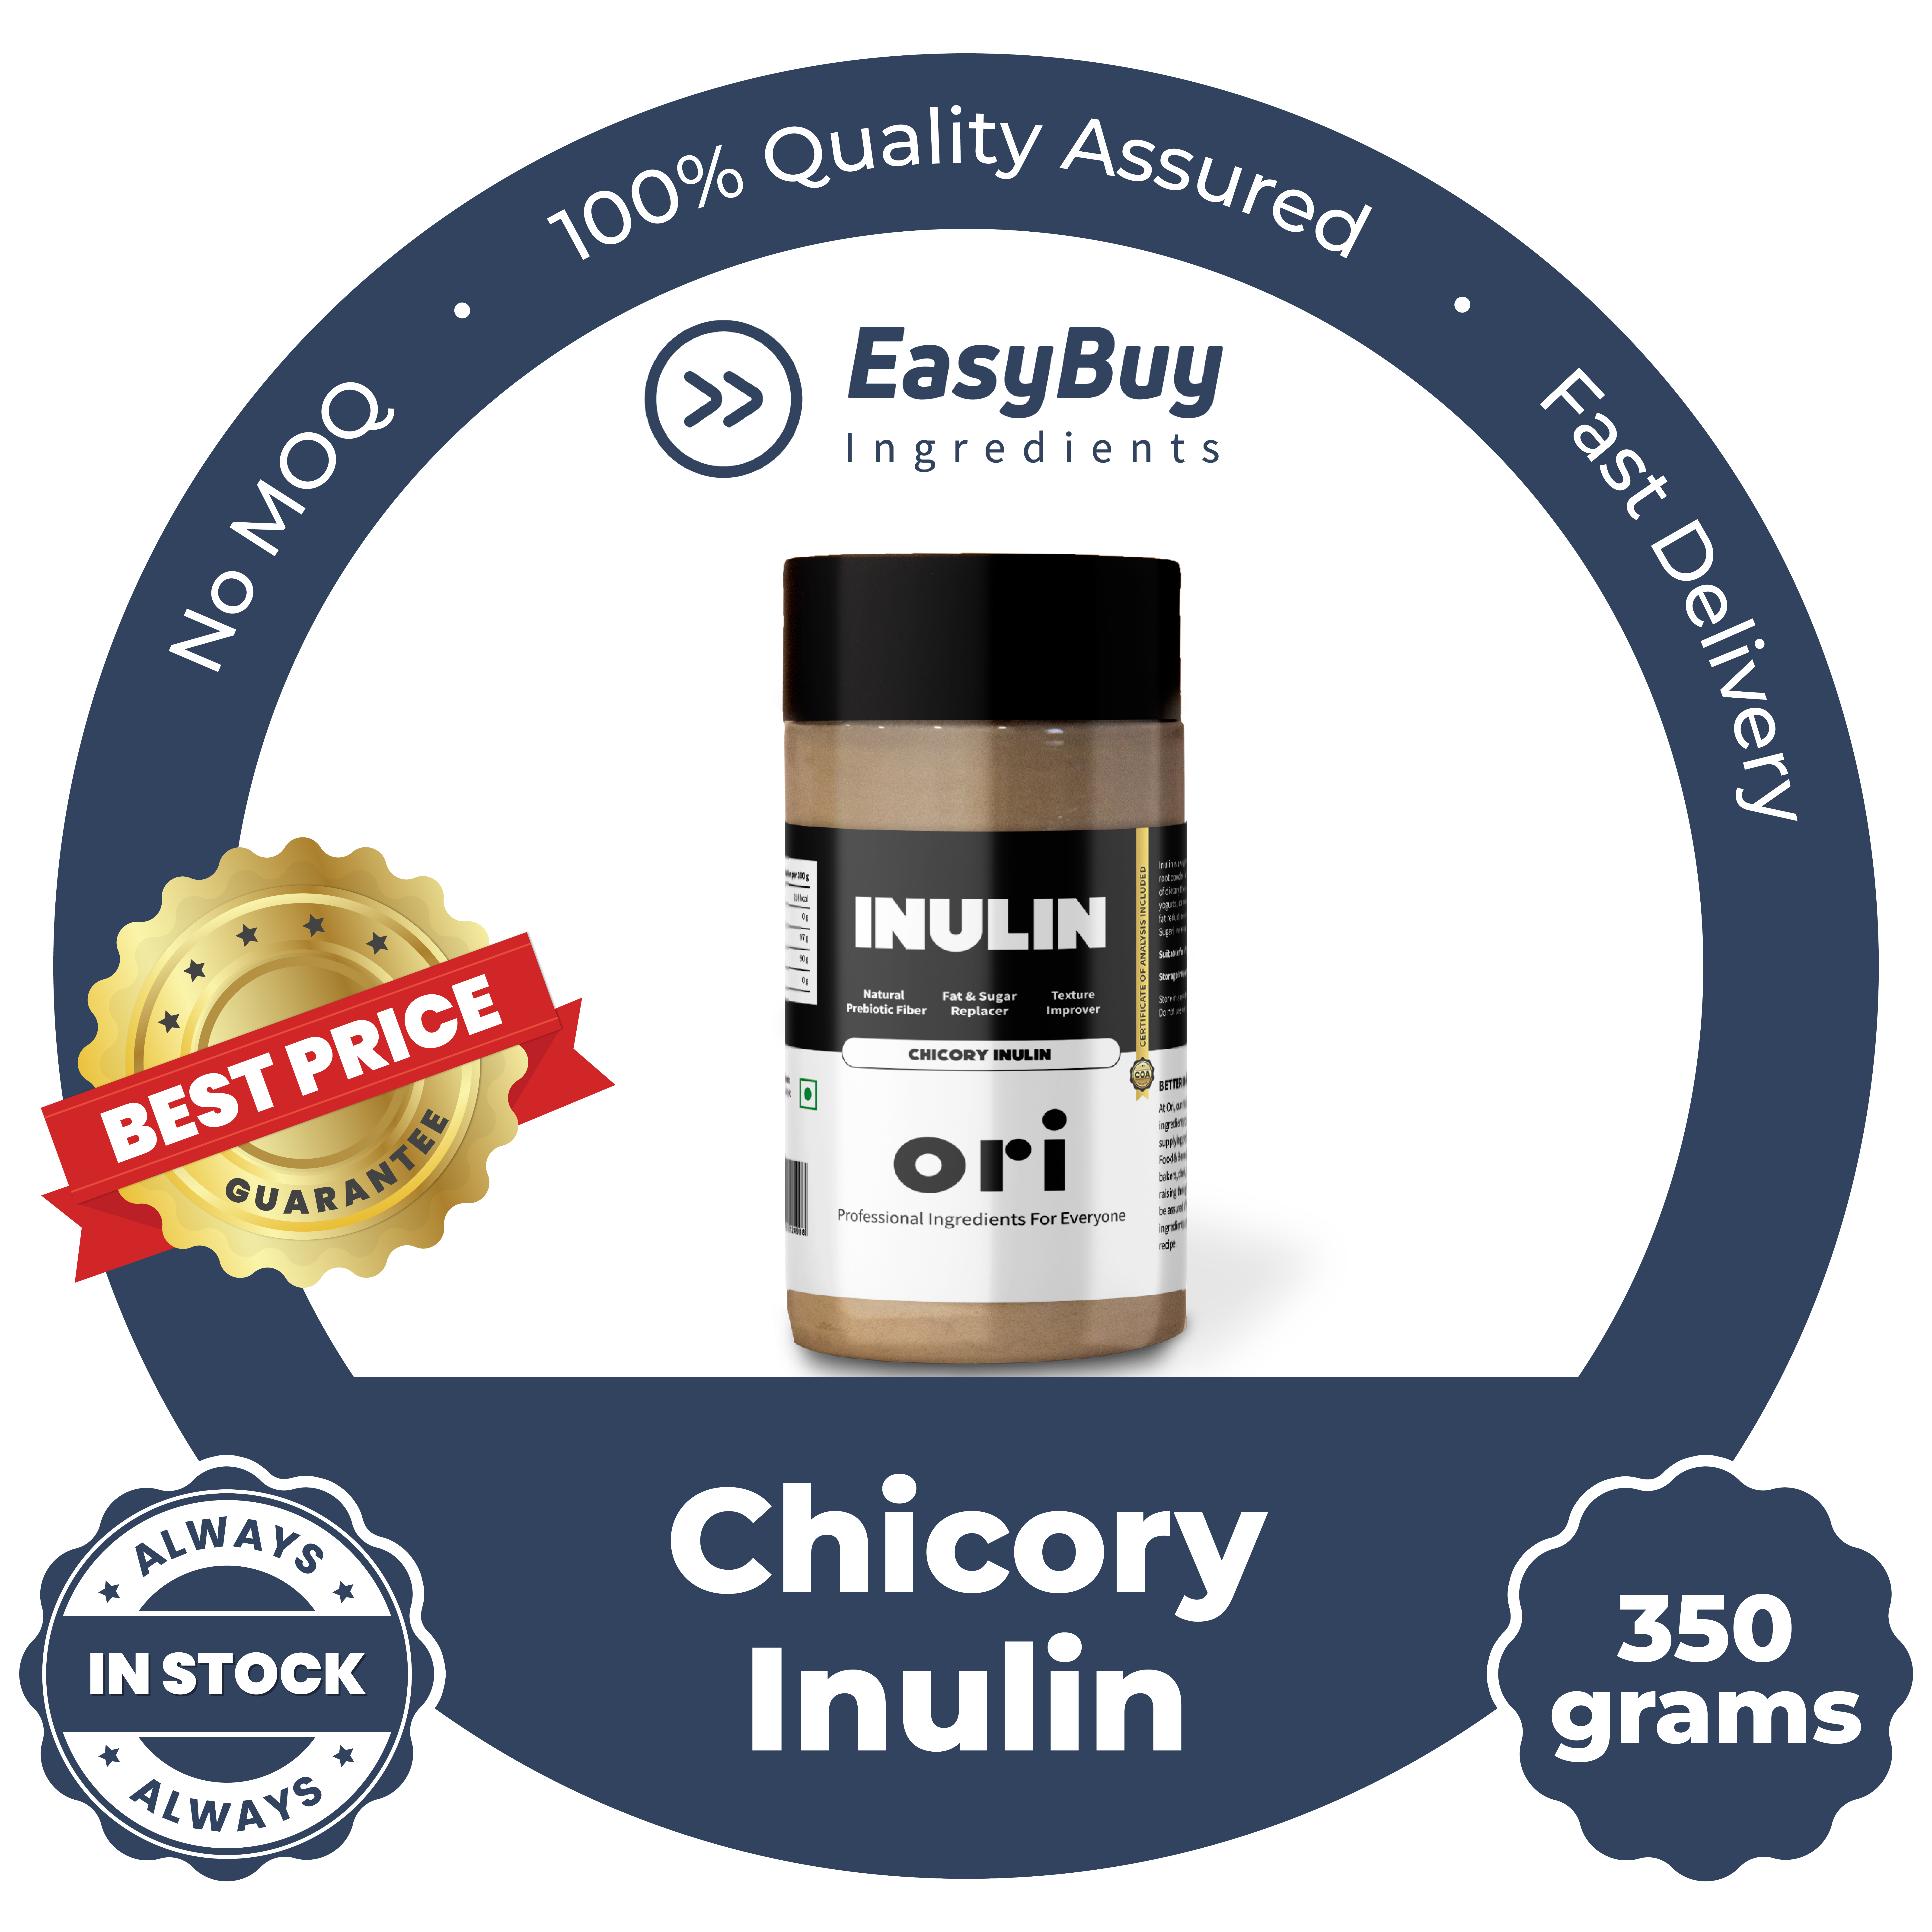 Chicory Inulin